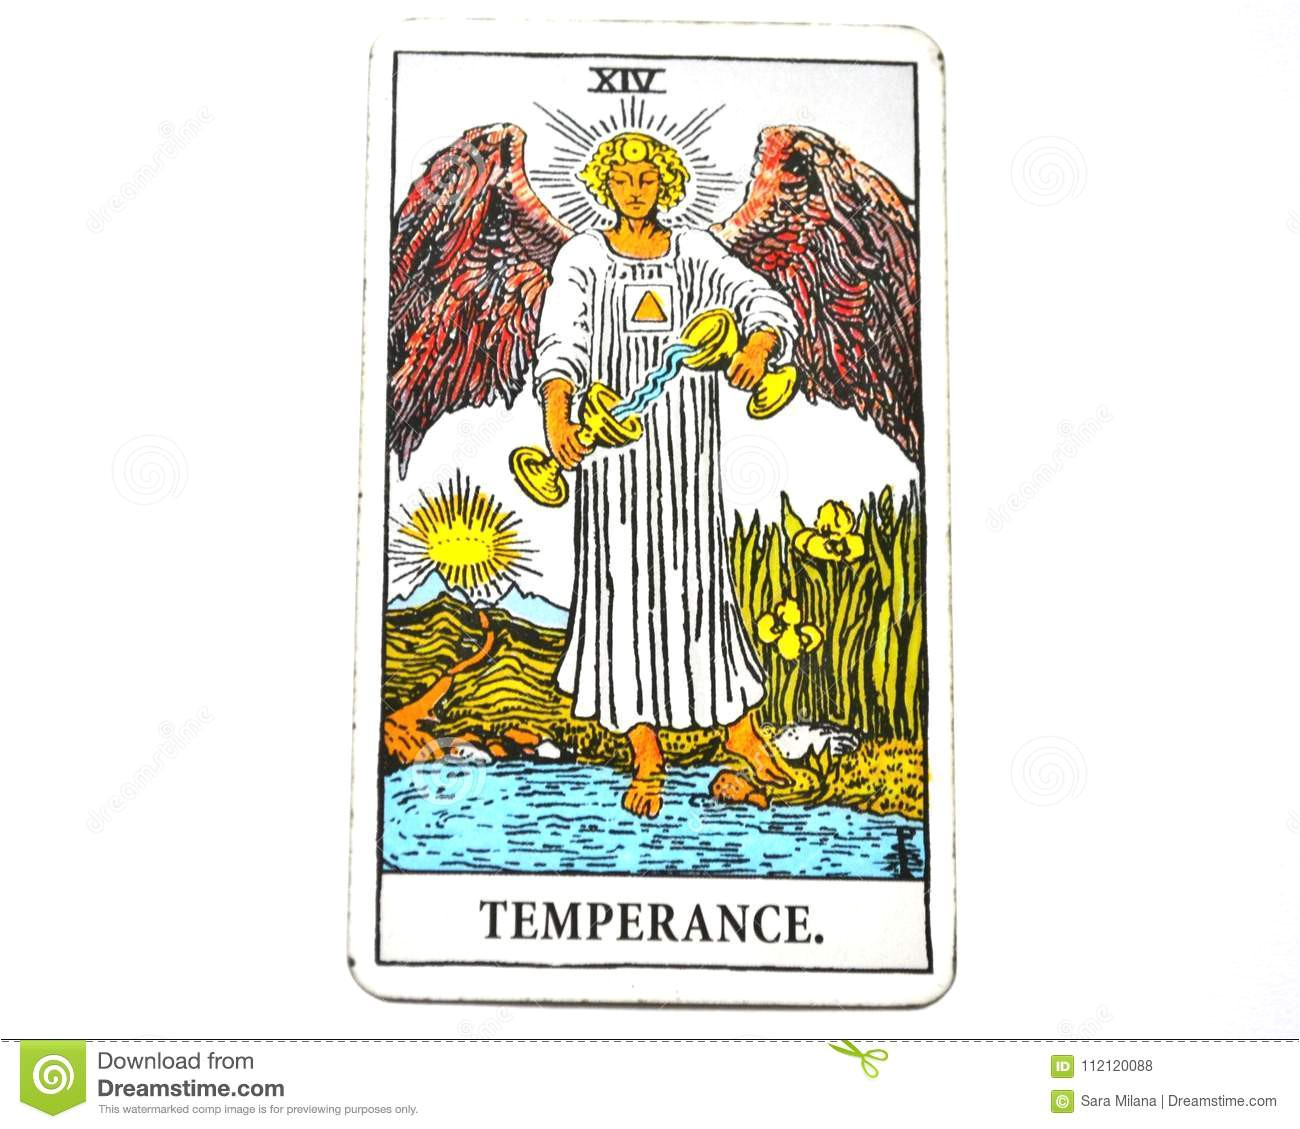 temperance tarot card brings healing harmony adaptability balance maintaining strong sense equilibrium temperance tarot card 112120088 jpg